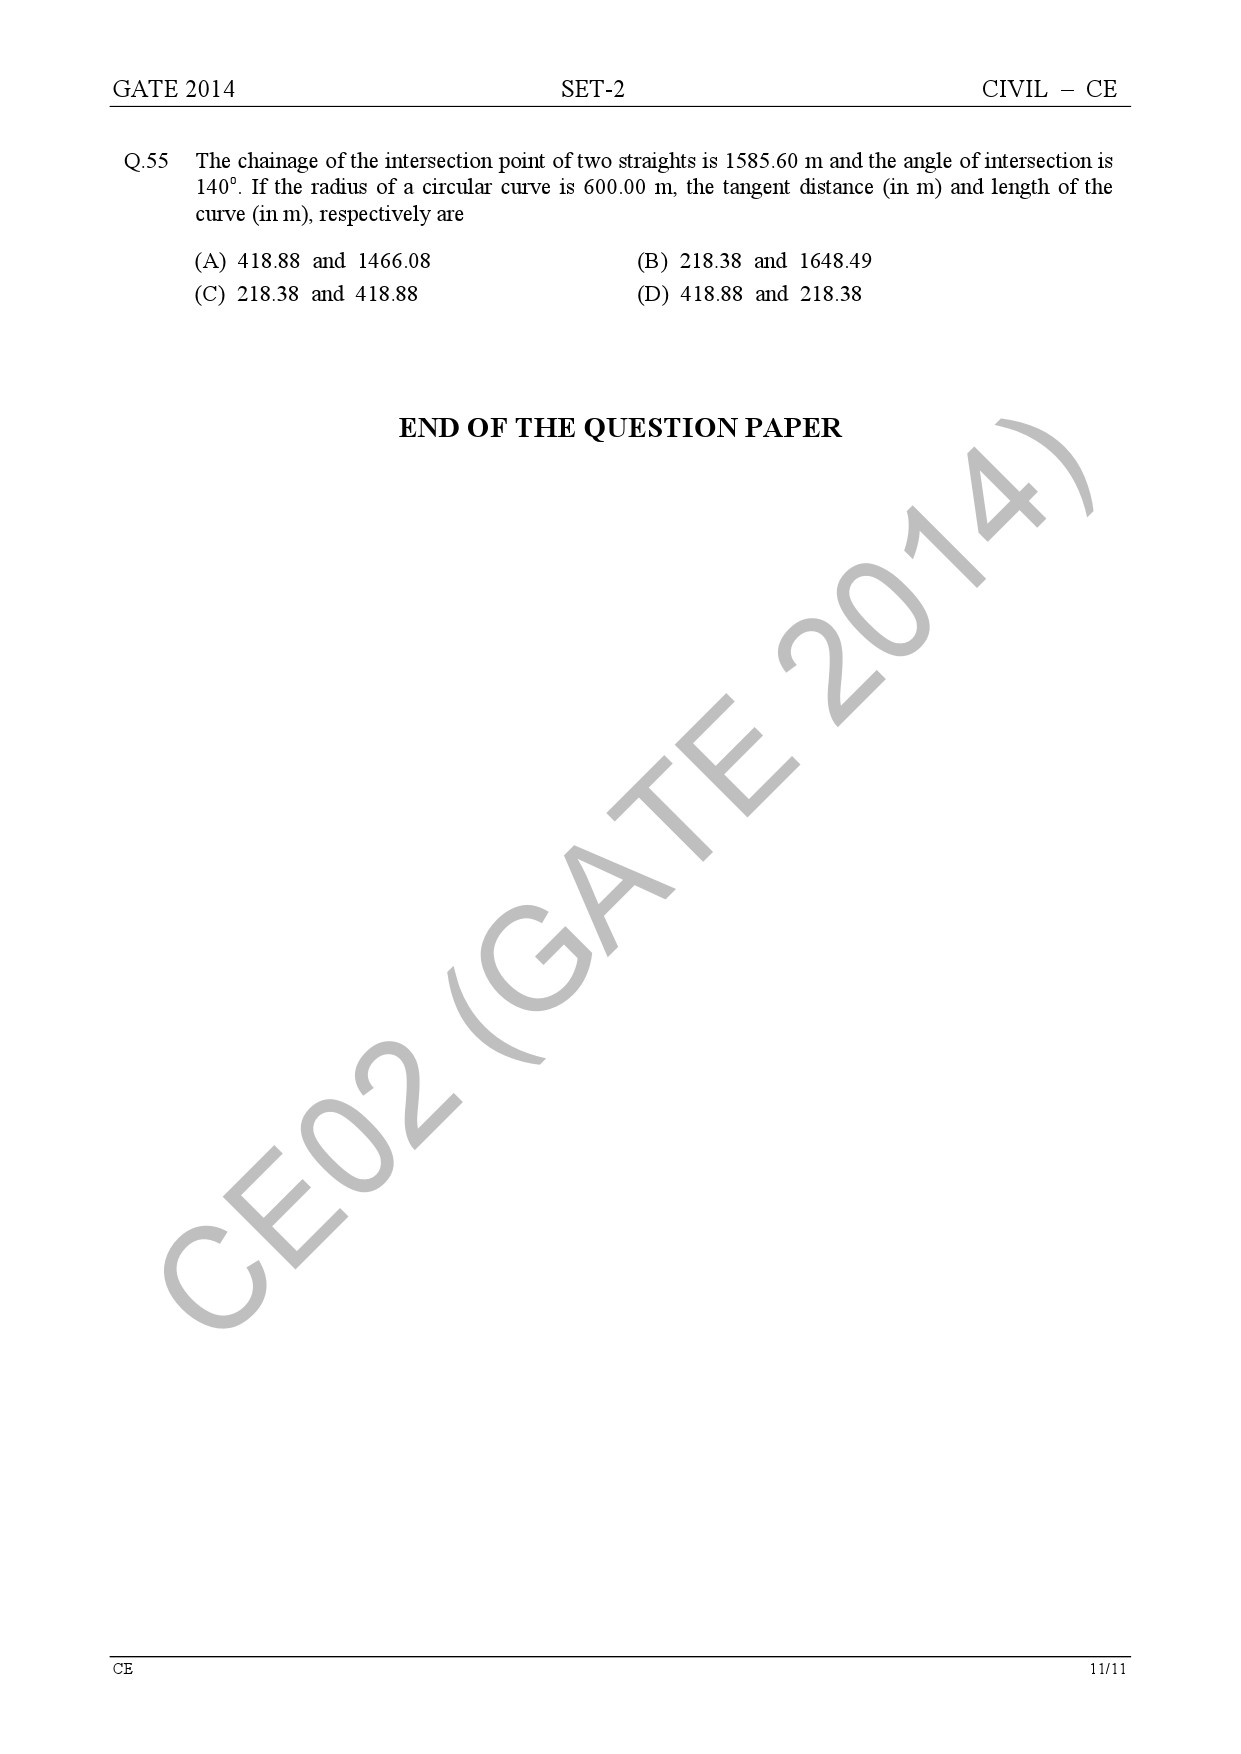 GATE Exam Question Paper 2014 Civil Engineering Set 2 17